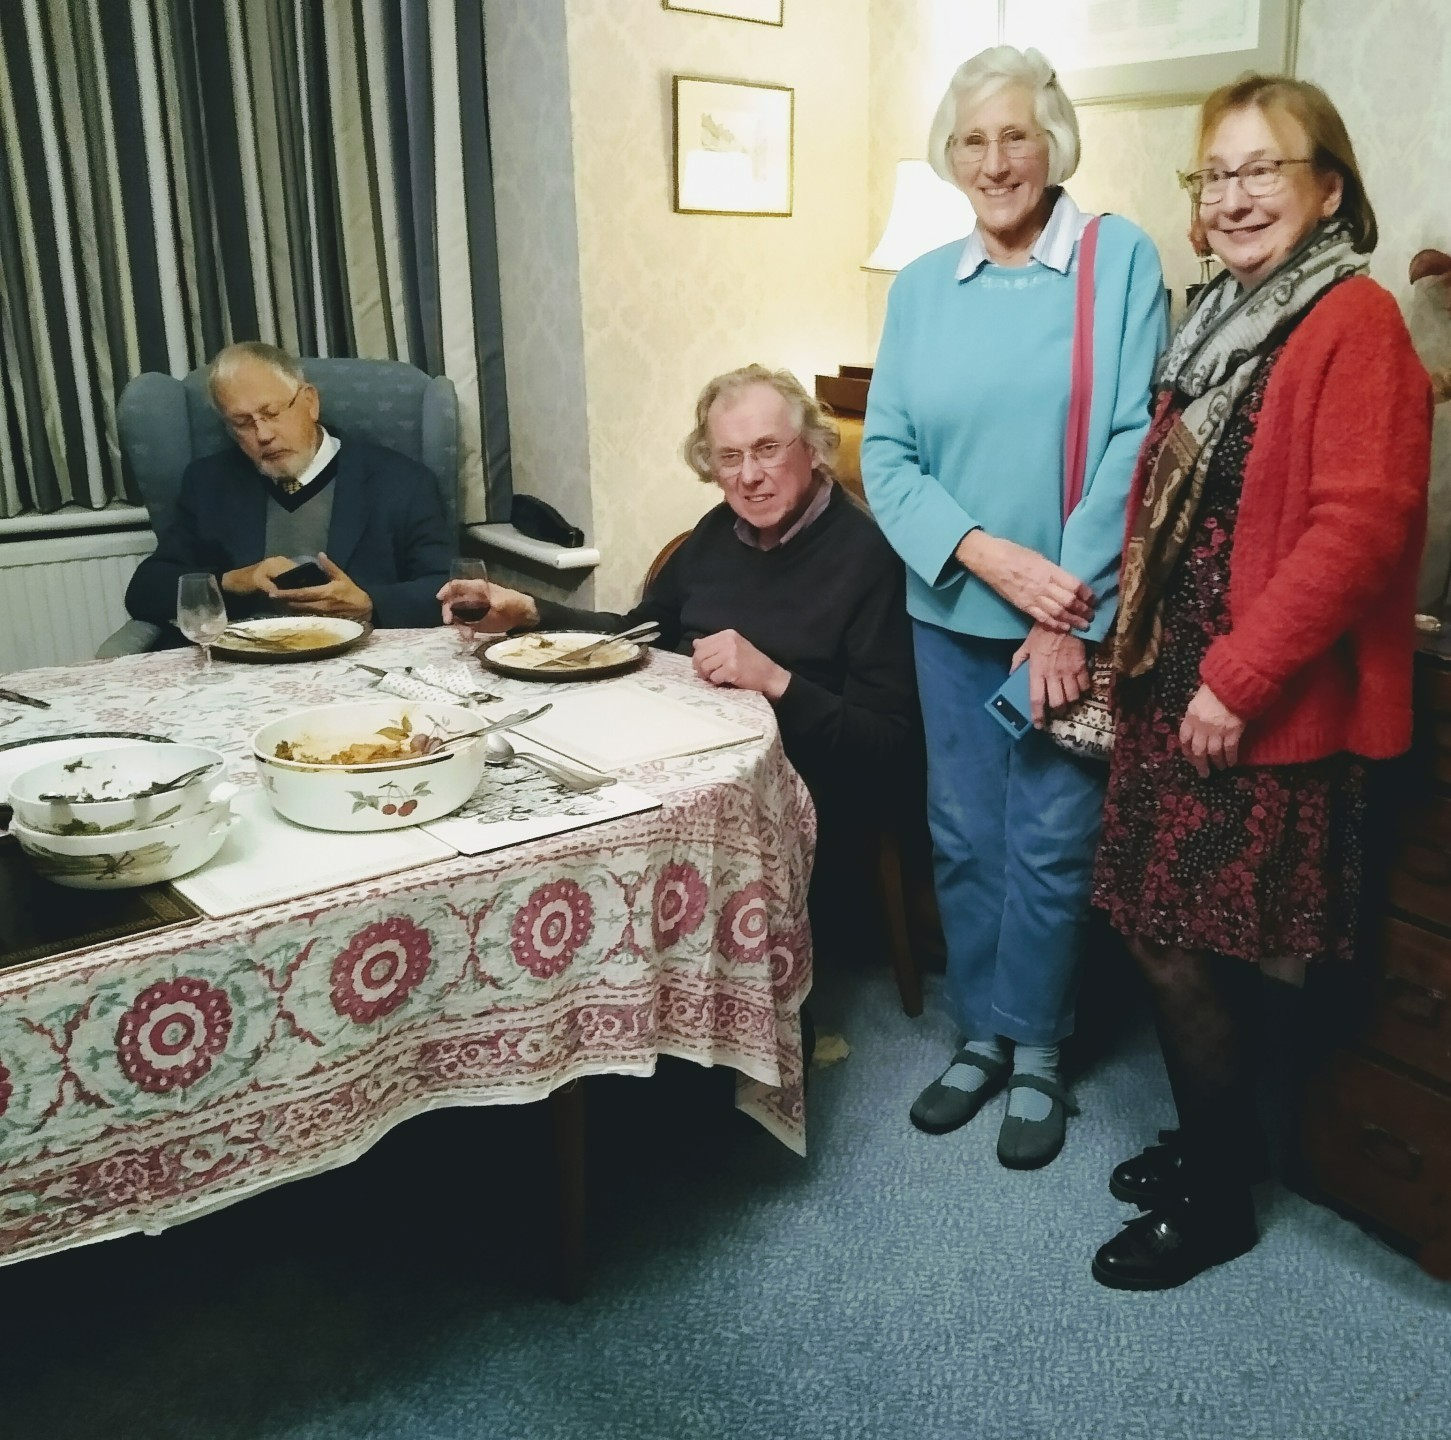 Image: EDOA members in the dining room